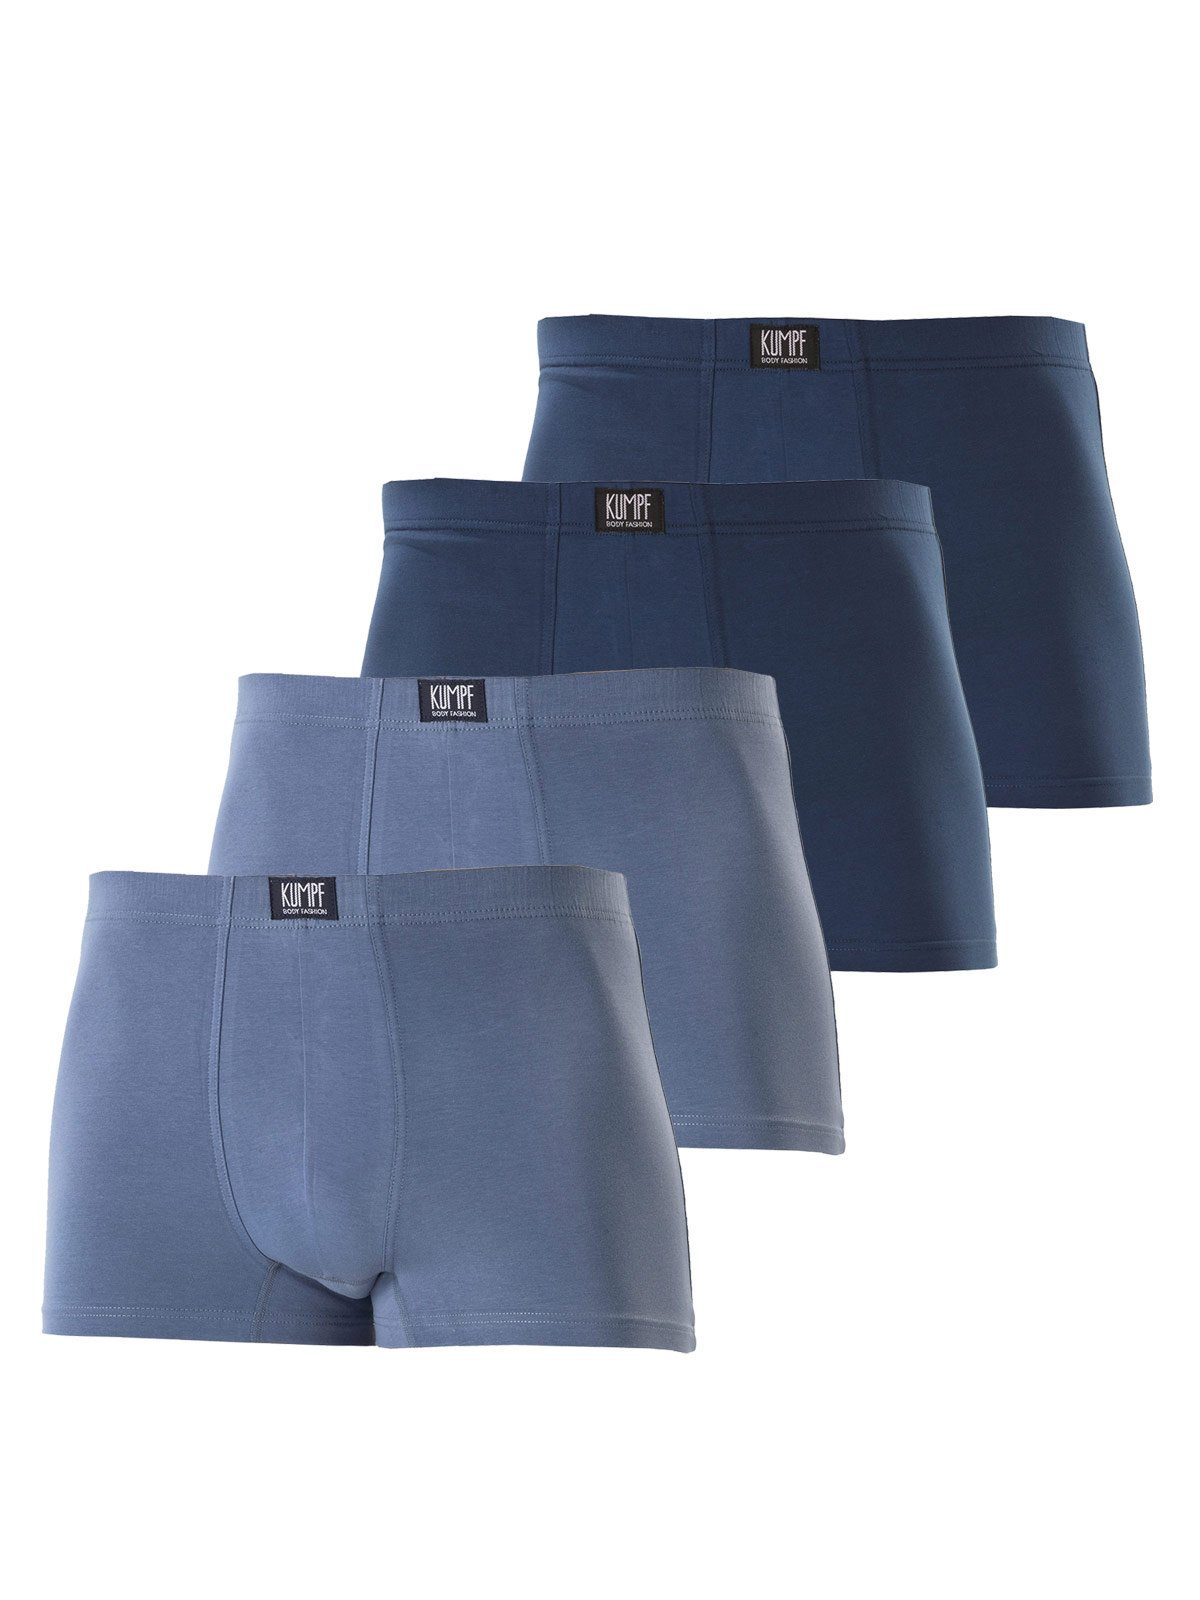 KUMPF Retro Pants 4er Sparpack Herren Pants Bio Cotton (Spar-Set, 4-St) hohe Markenqualität darkblue stahl